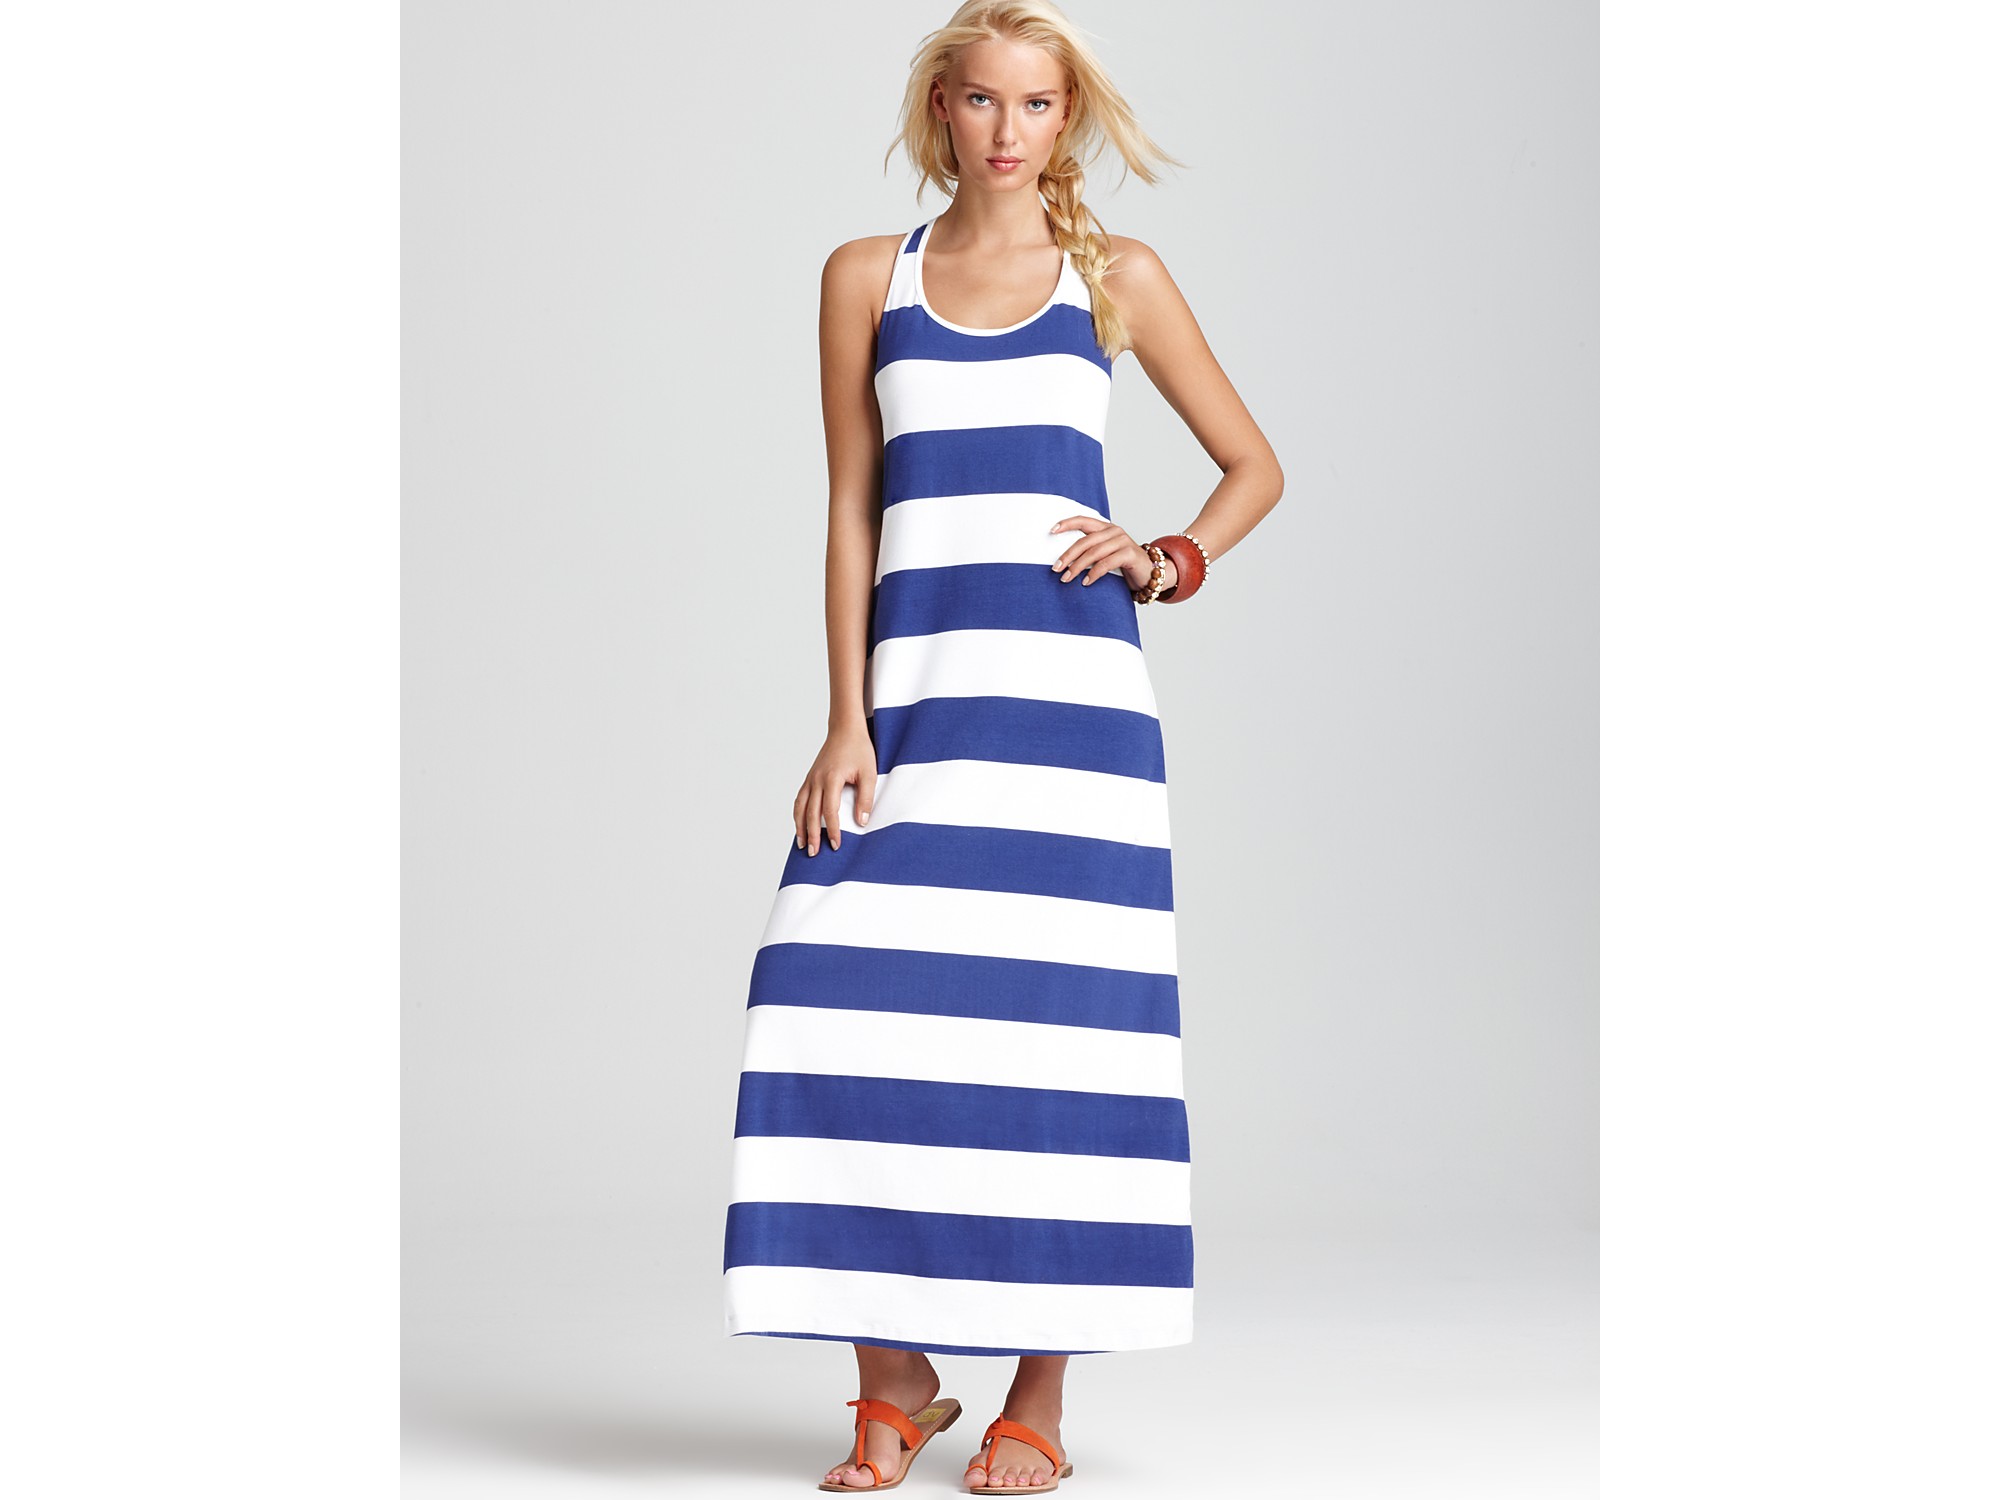 Lyst - Tommy Bahama Striped Maxi Dress in Blue2000 x 1500